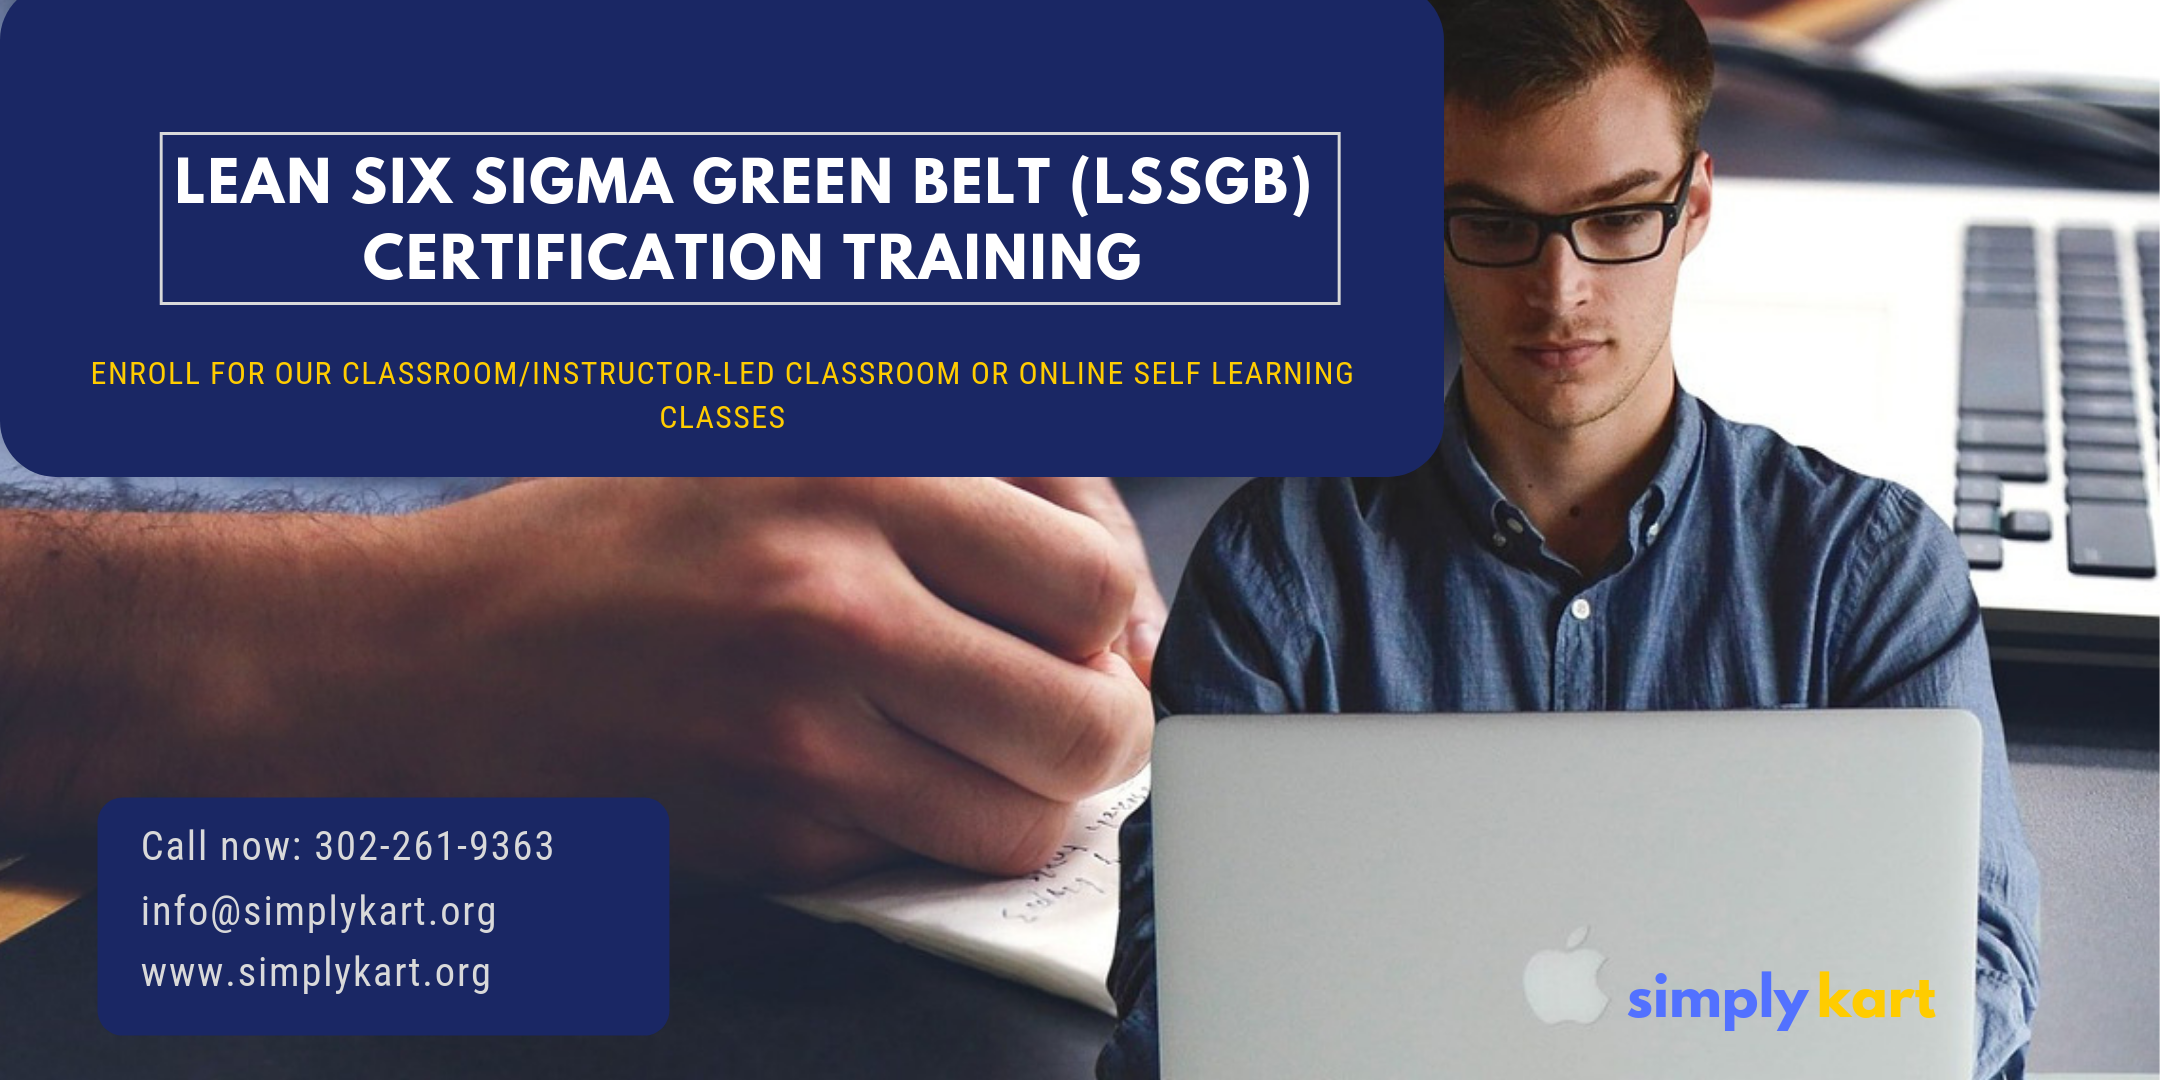 Lean Six Sigma Green Belt (LSSGB) Certification Training in McAllen, TX 